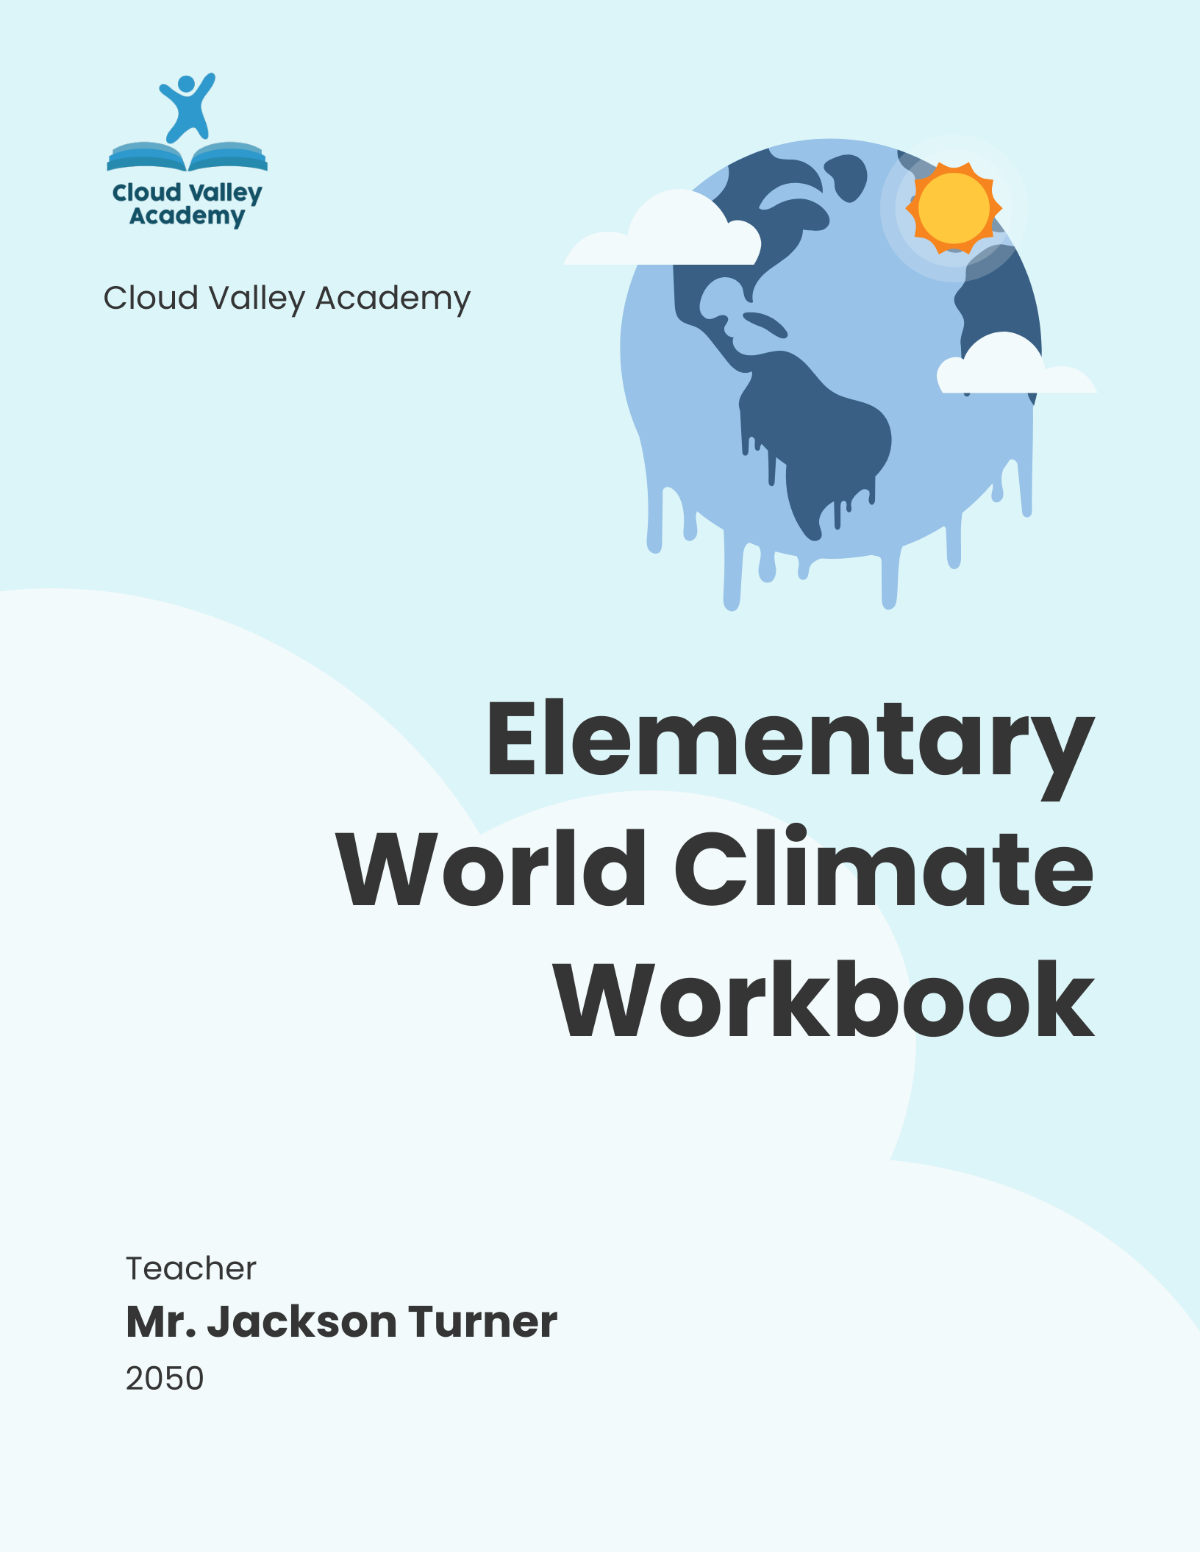 World Climate Workbook Template